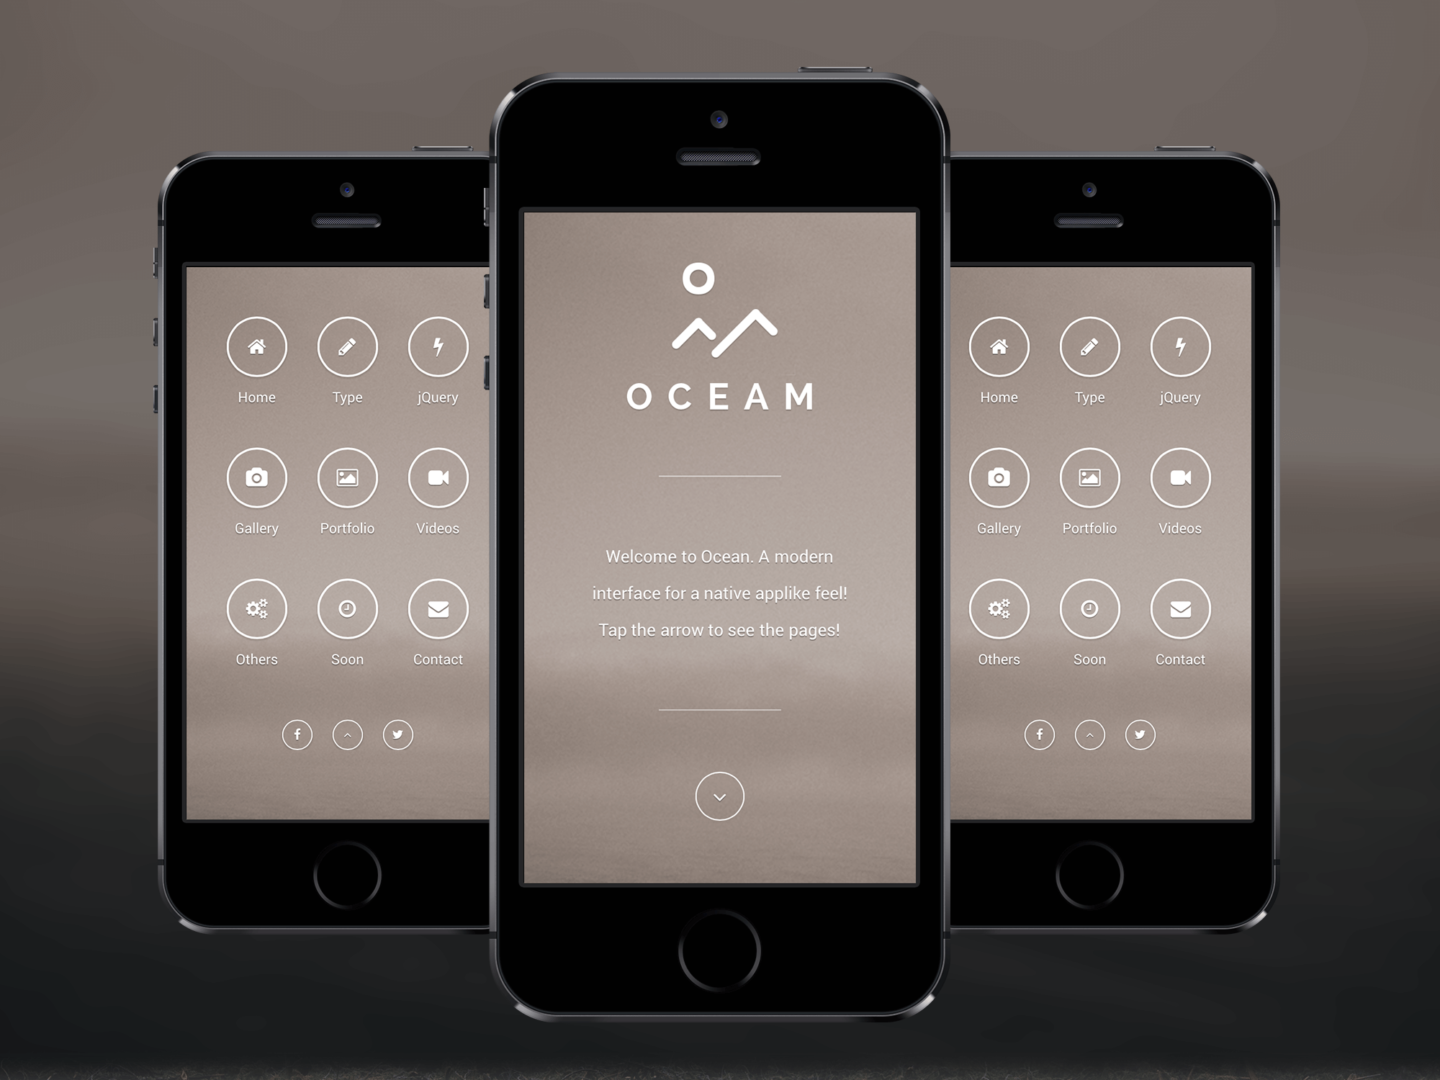 Oceam theme PhoneGap & Cordova Mobile App